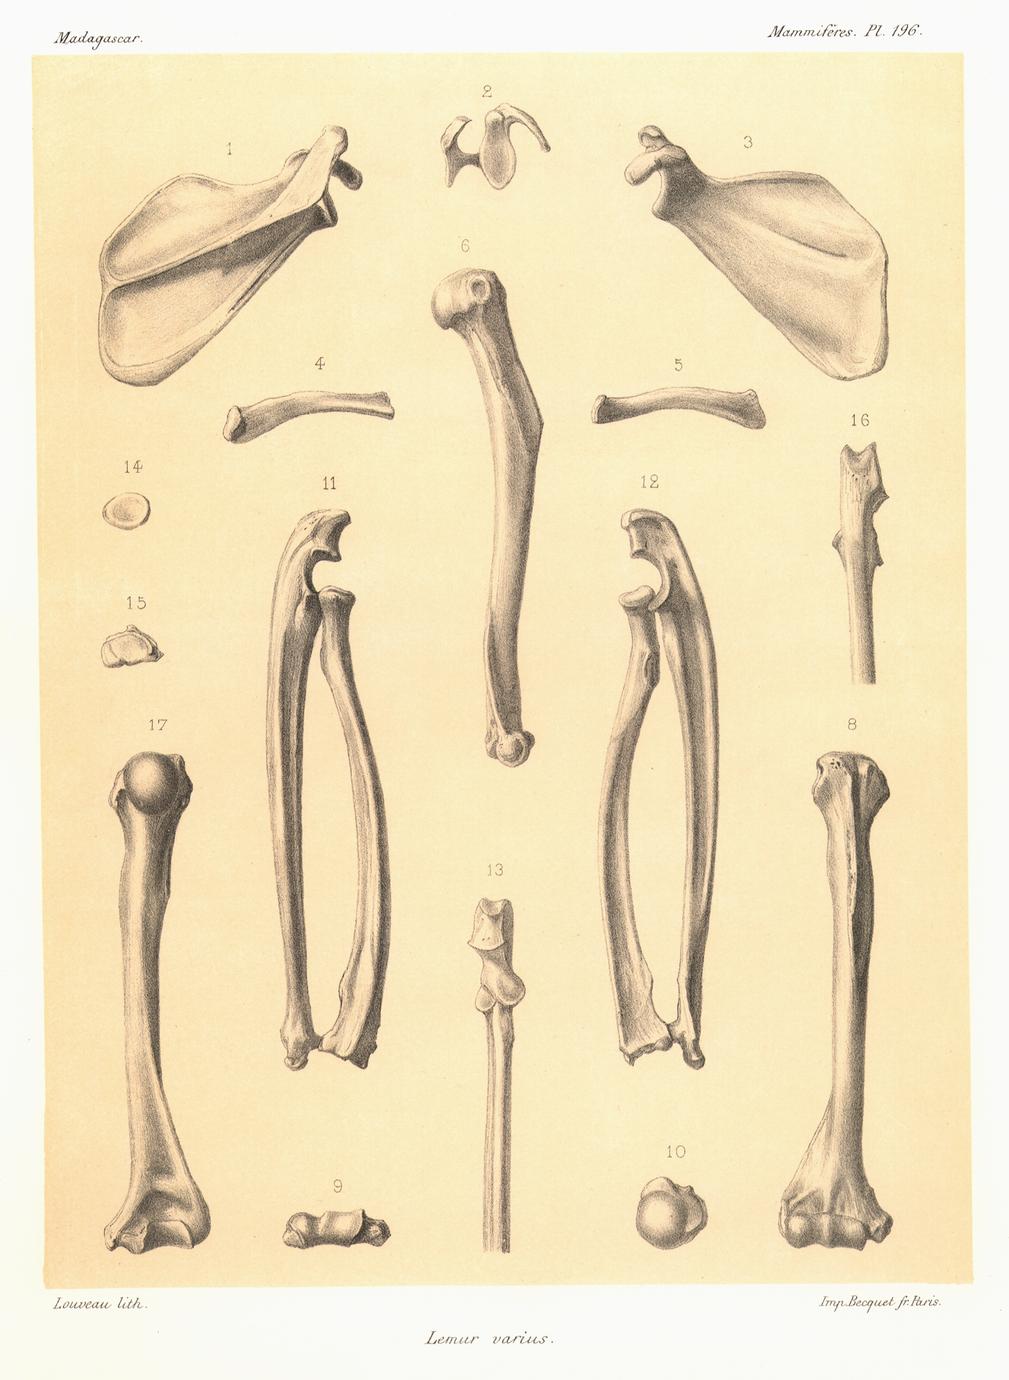 Lemur varius